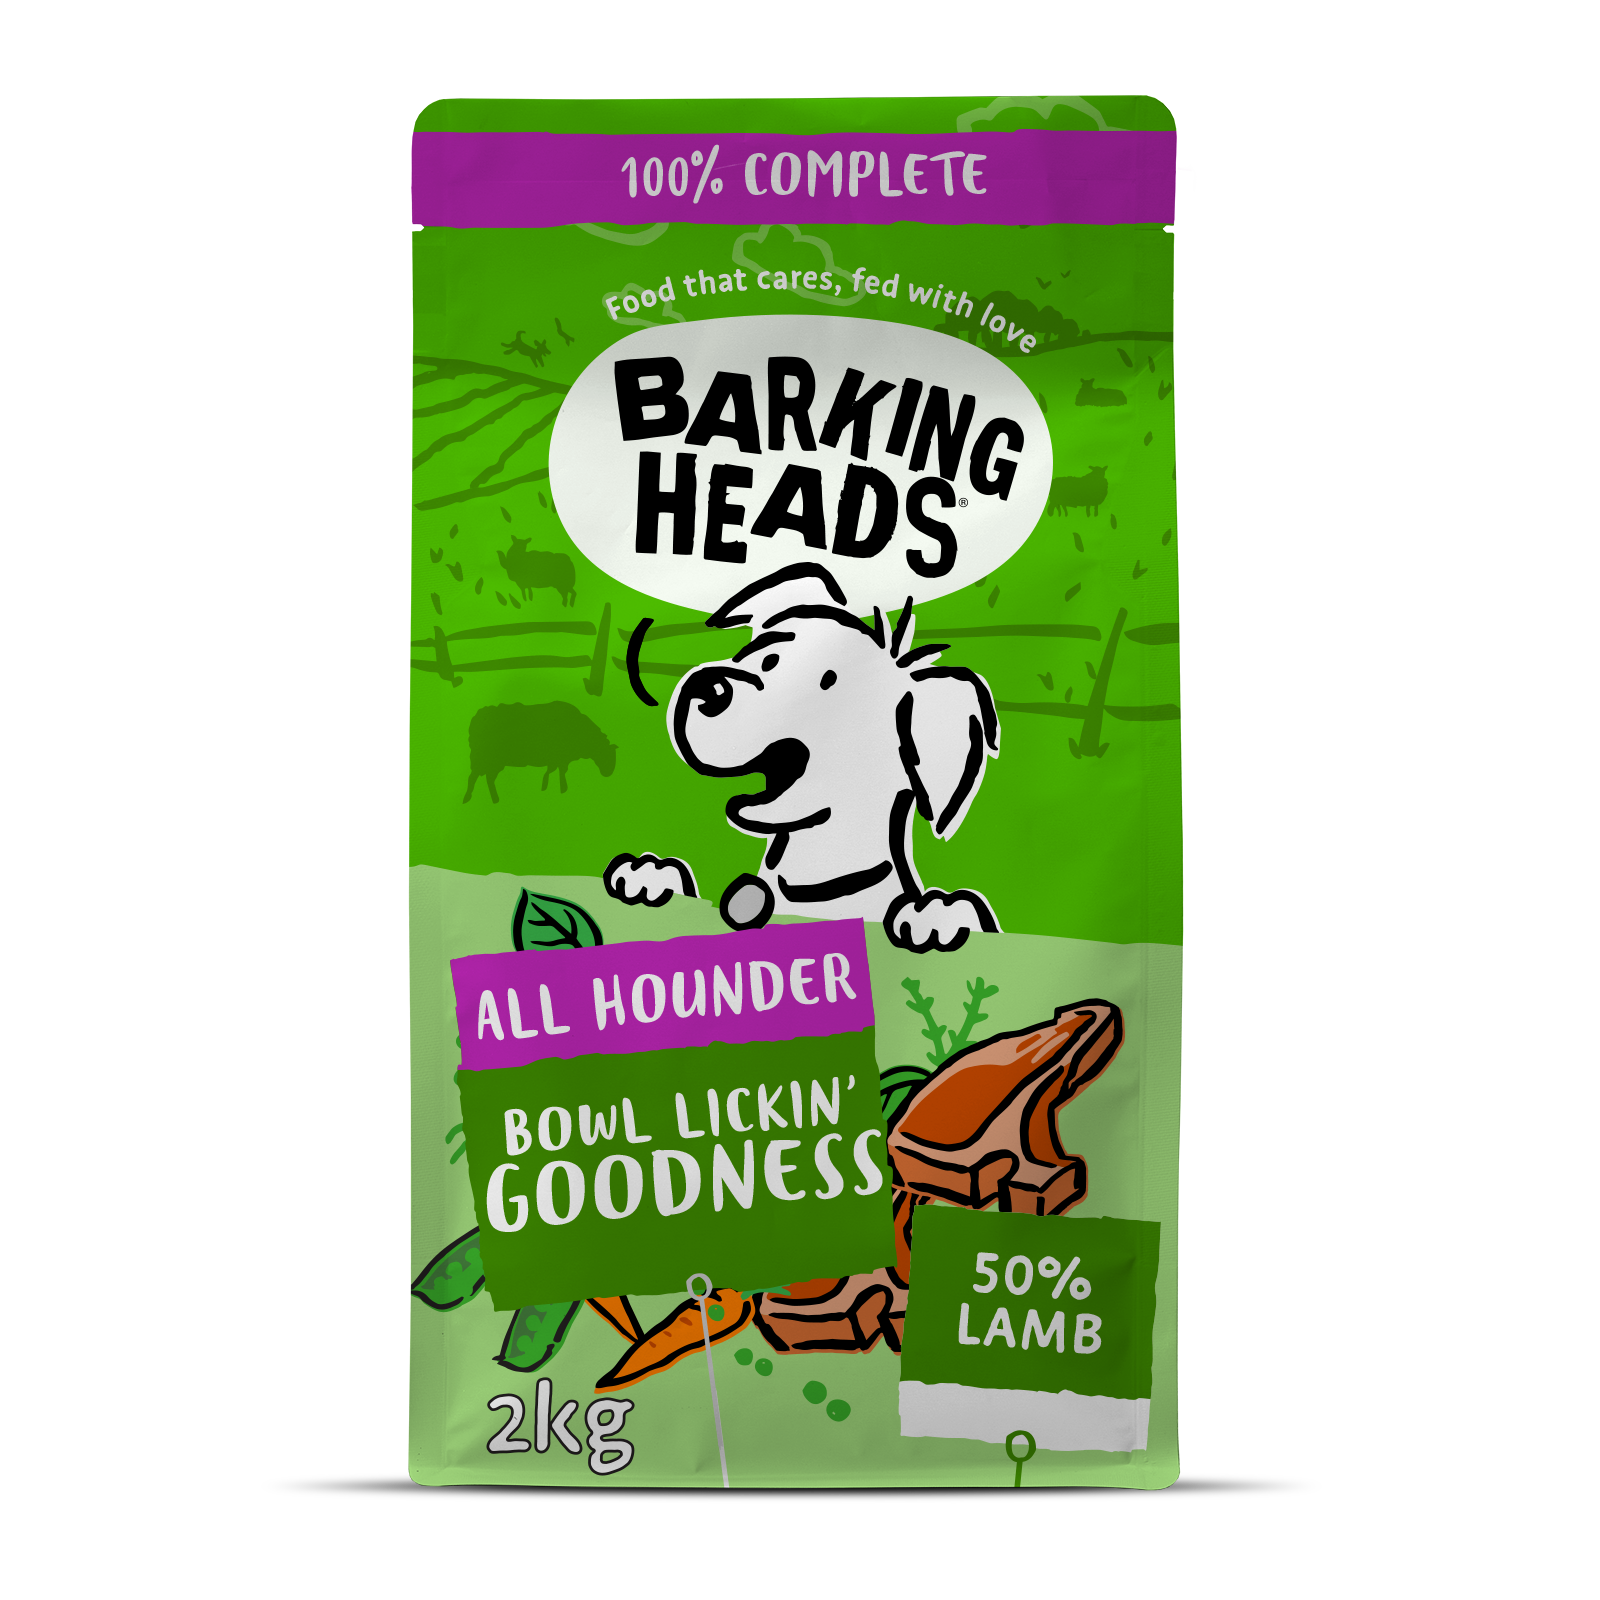 Barking Heads All Hounder Bowl Lickin' Goodness Lamb